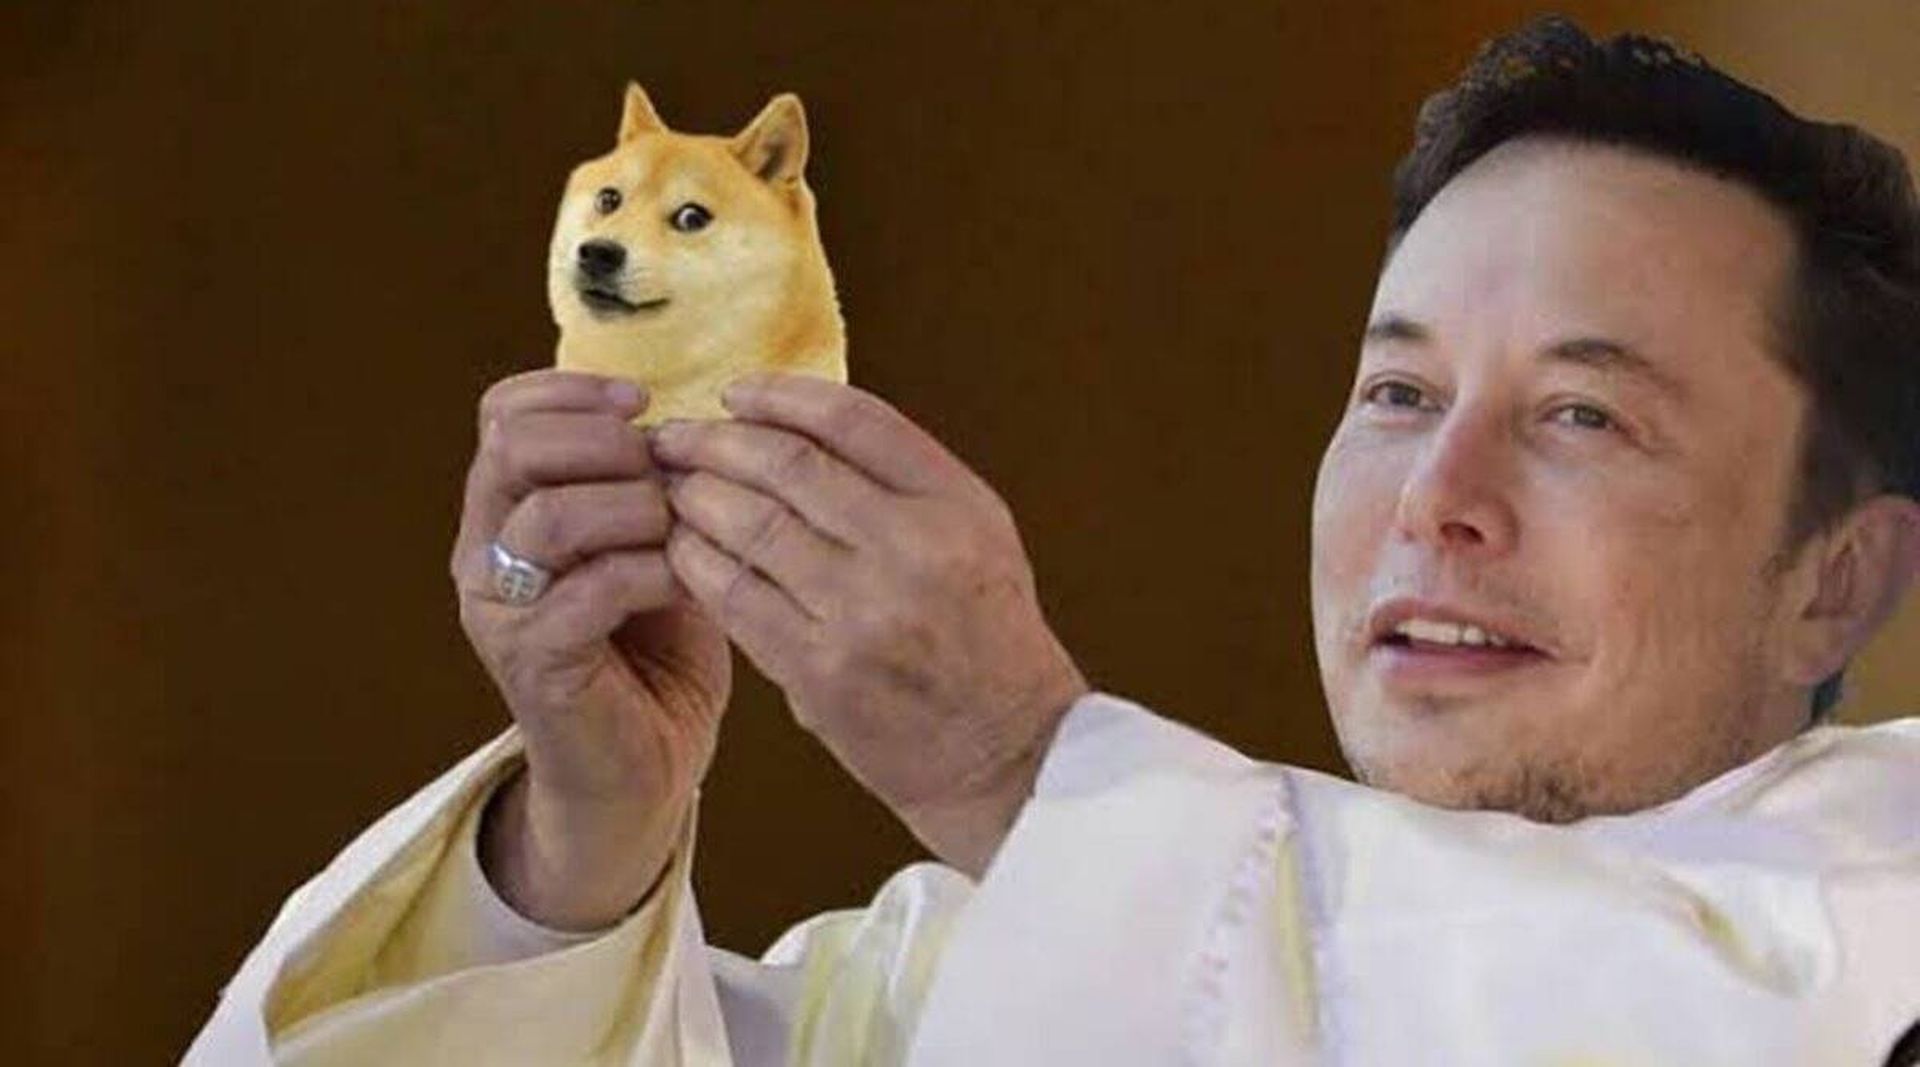 Elon Musk diz: “Continuarei apoiando Dogecoin”